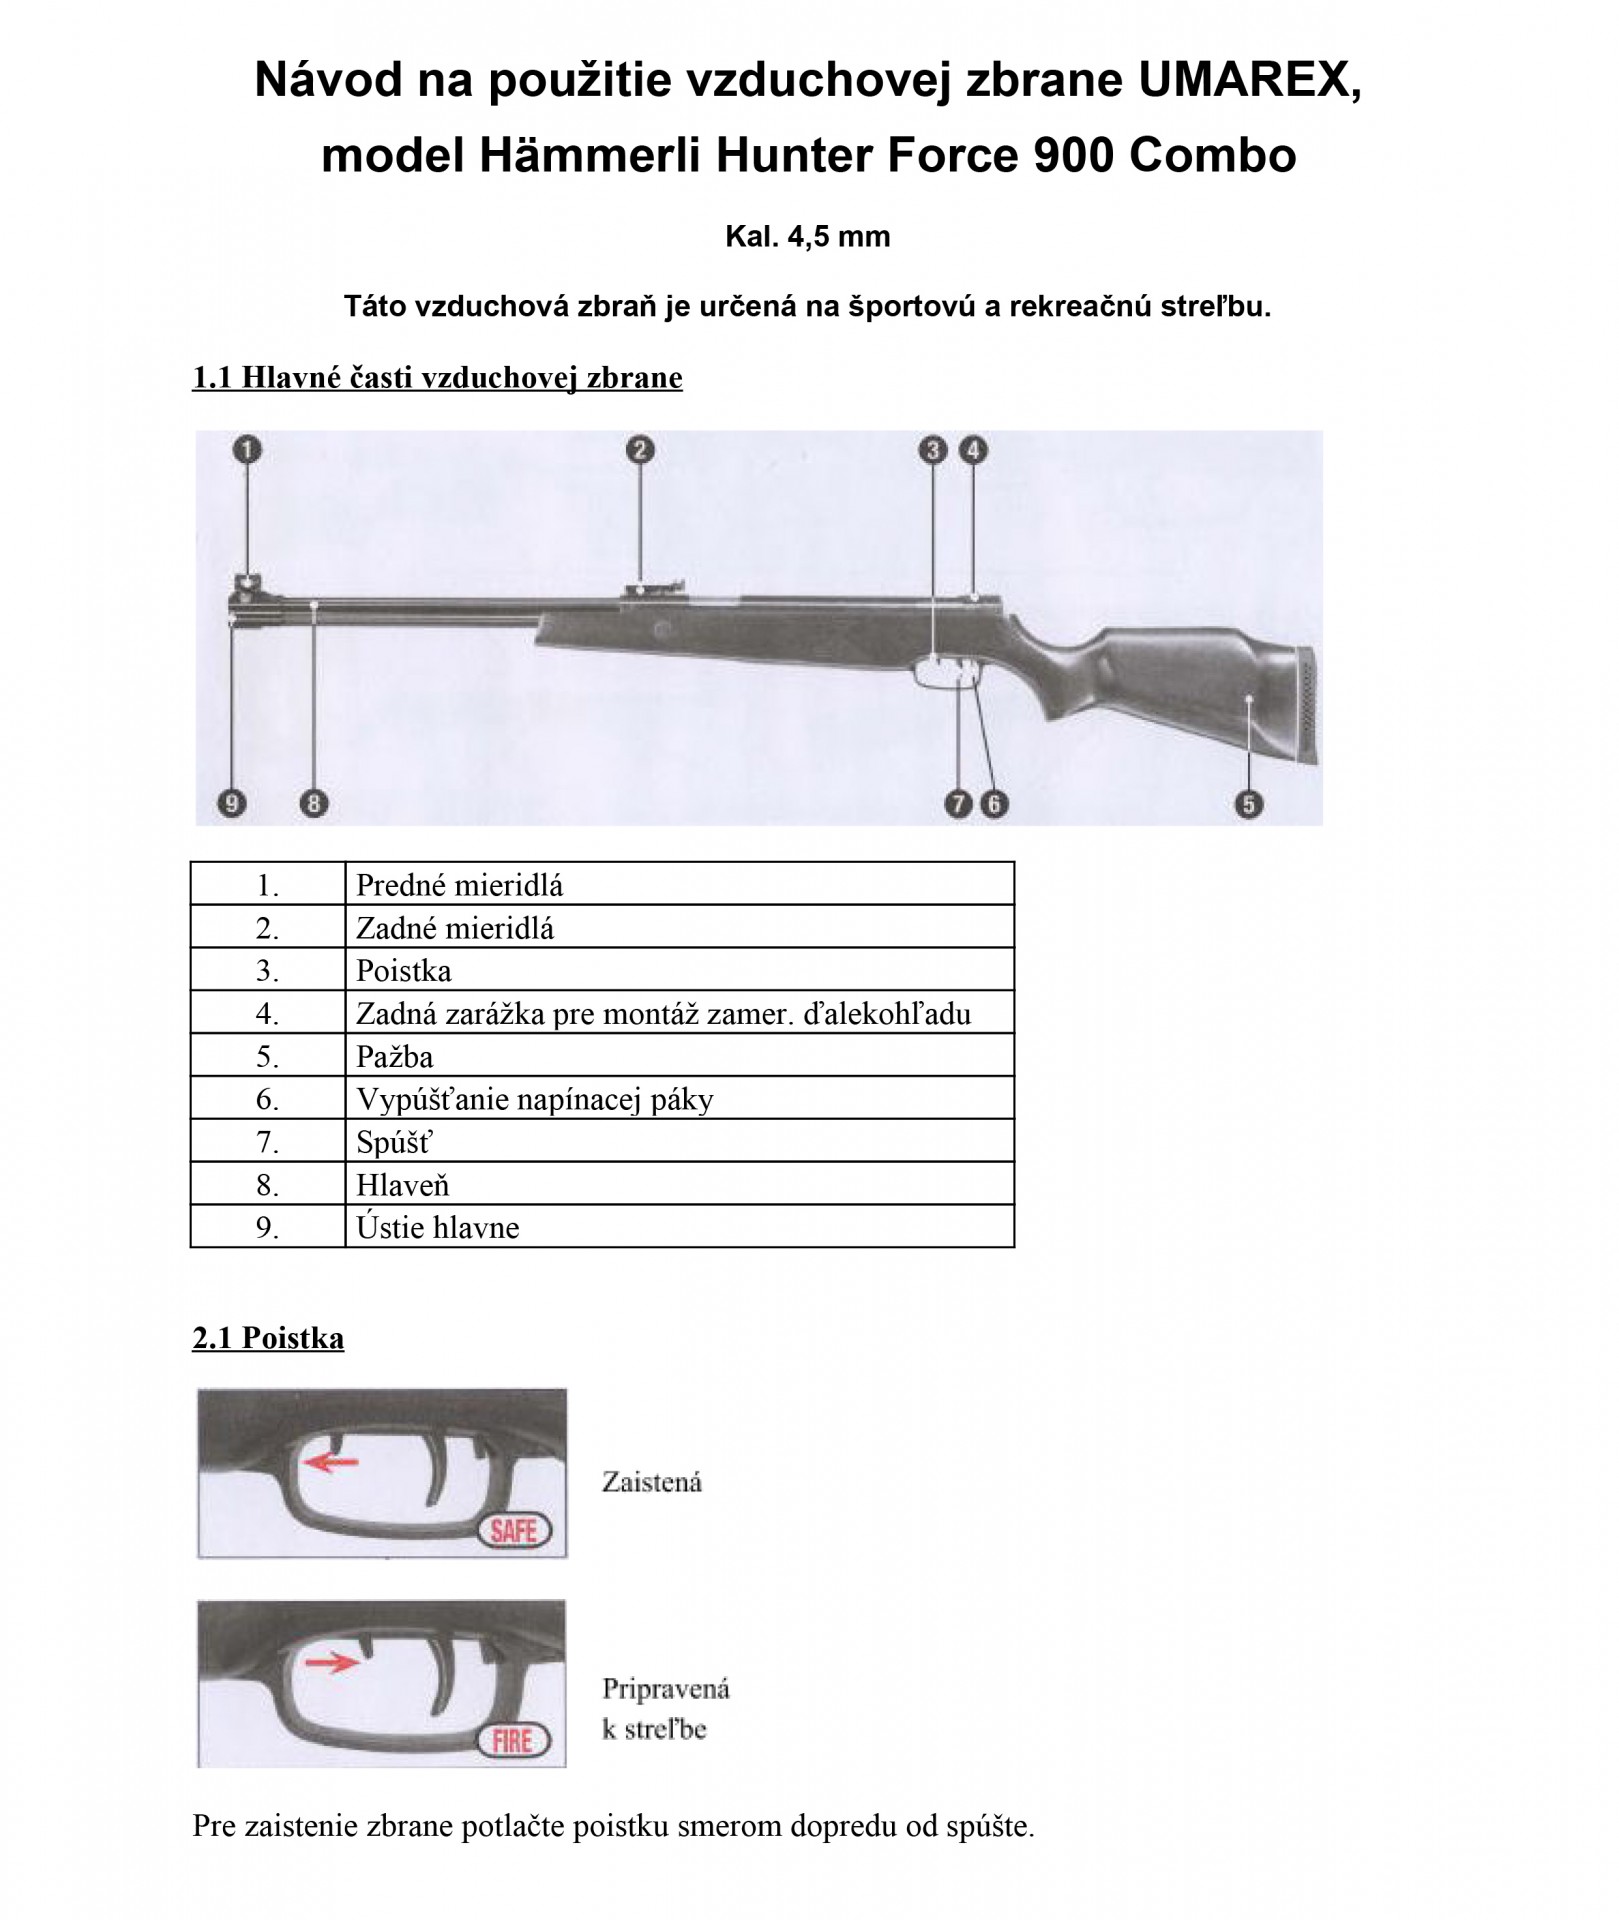 Vzduchovka Hämmerli Hunter Force 900 Combo, kal. 4,5mm